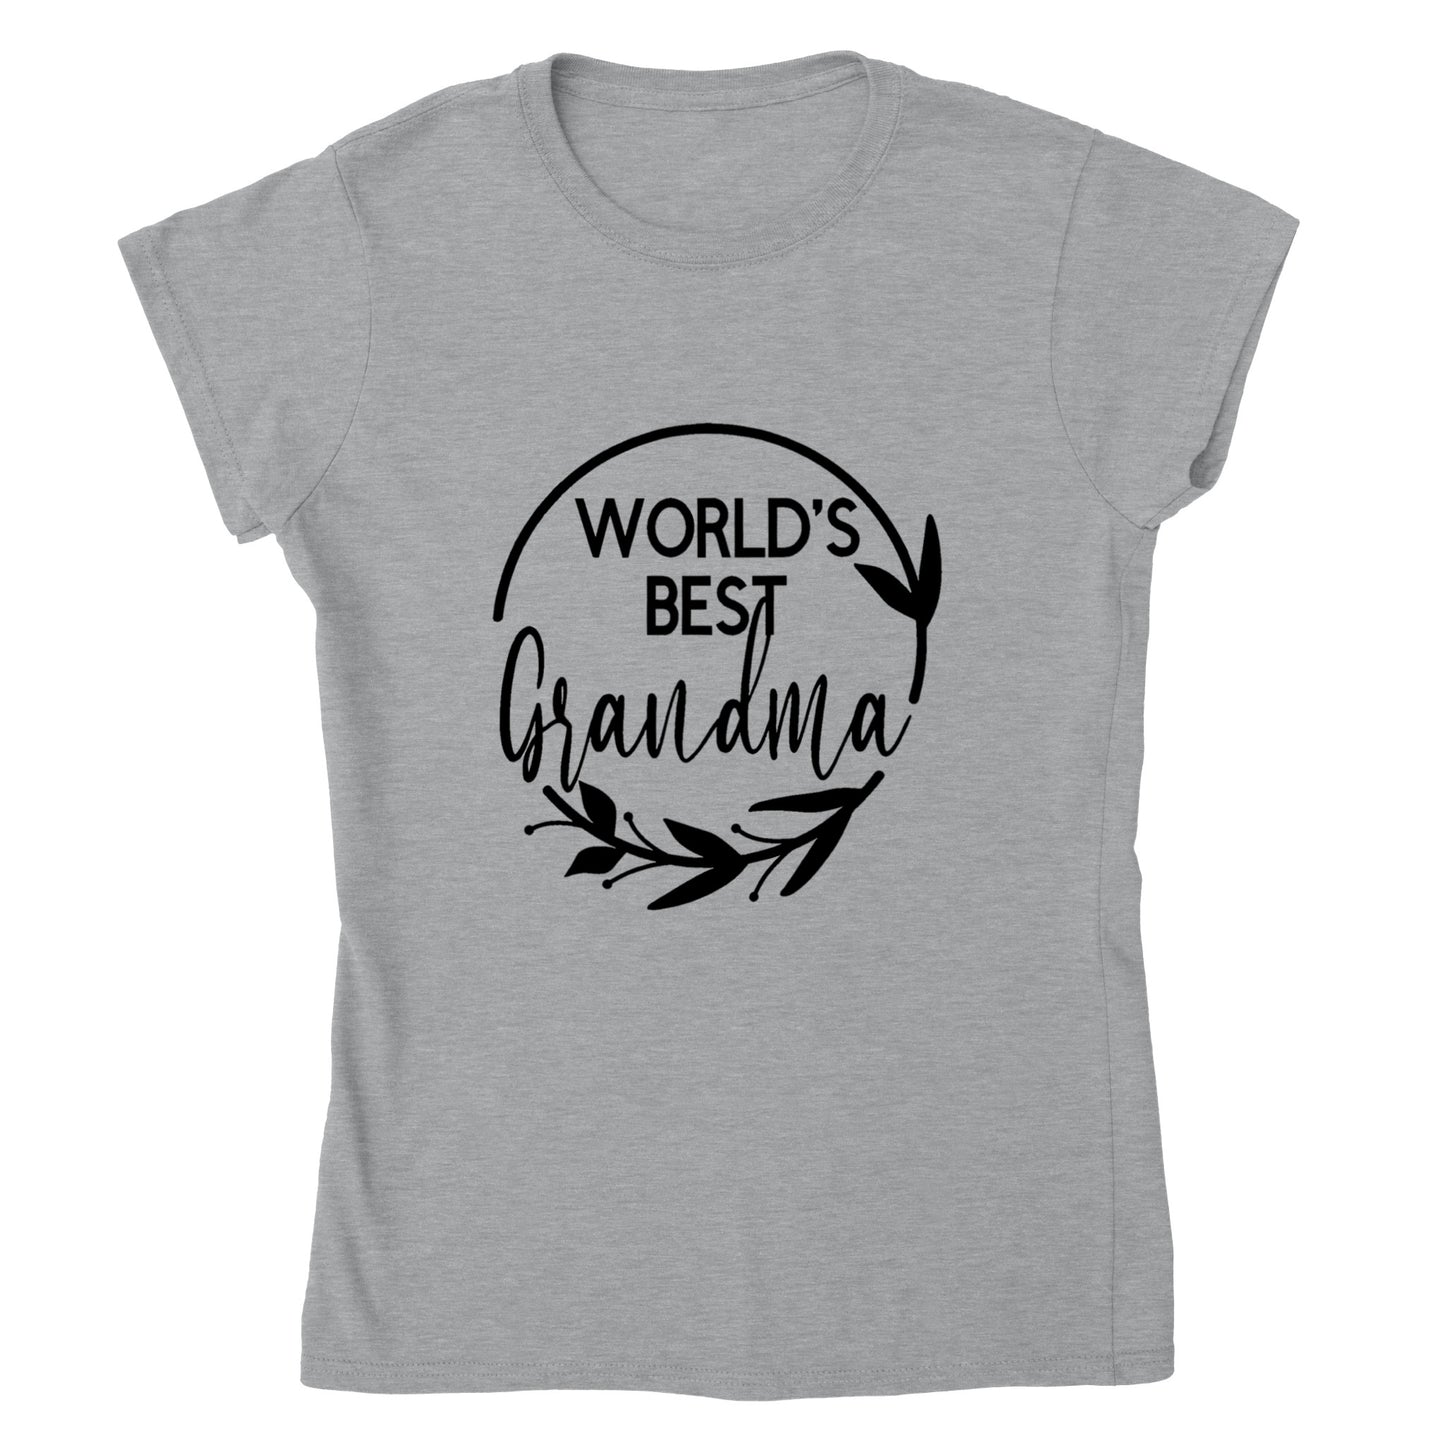 World's Best Grandma T-shirt